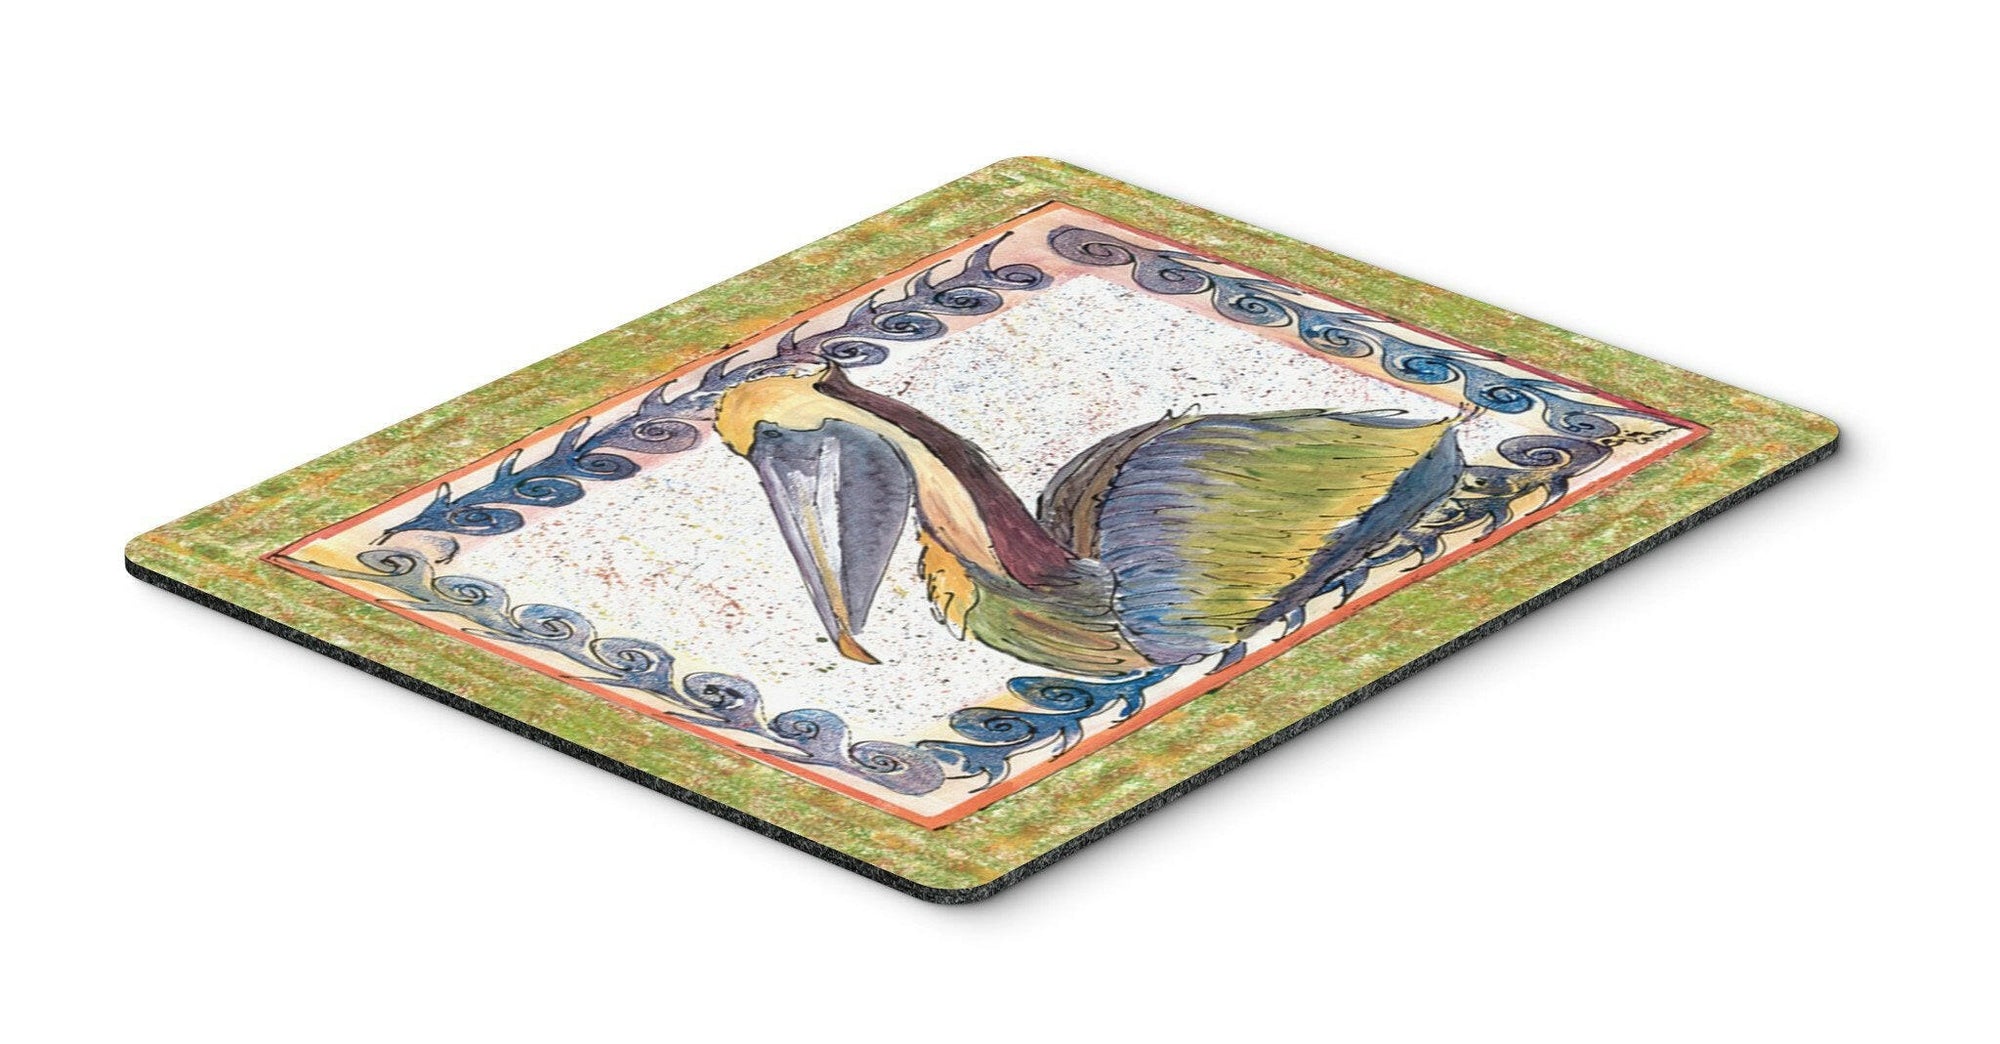 Bird - Pelican Mouse pad, hot pad, or trivet by Caroline's Treasures